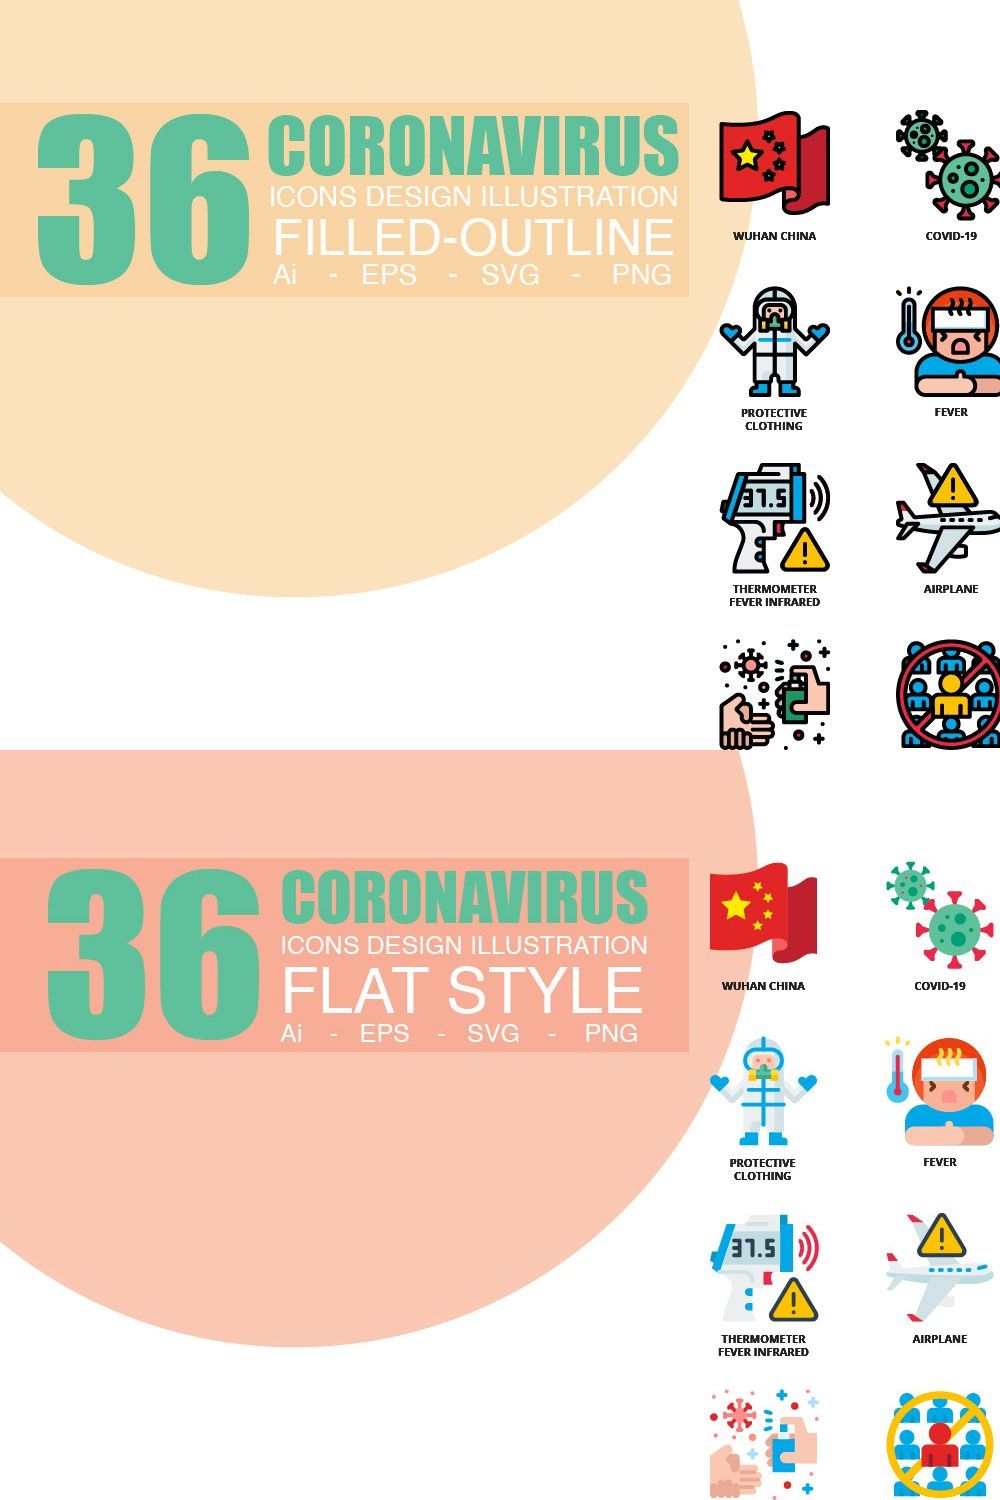 36 Coronavirus icons set x 3 Style pinterest preview image.